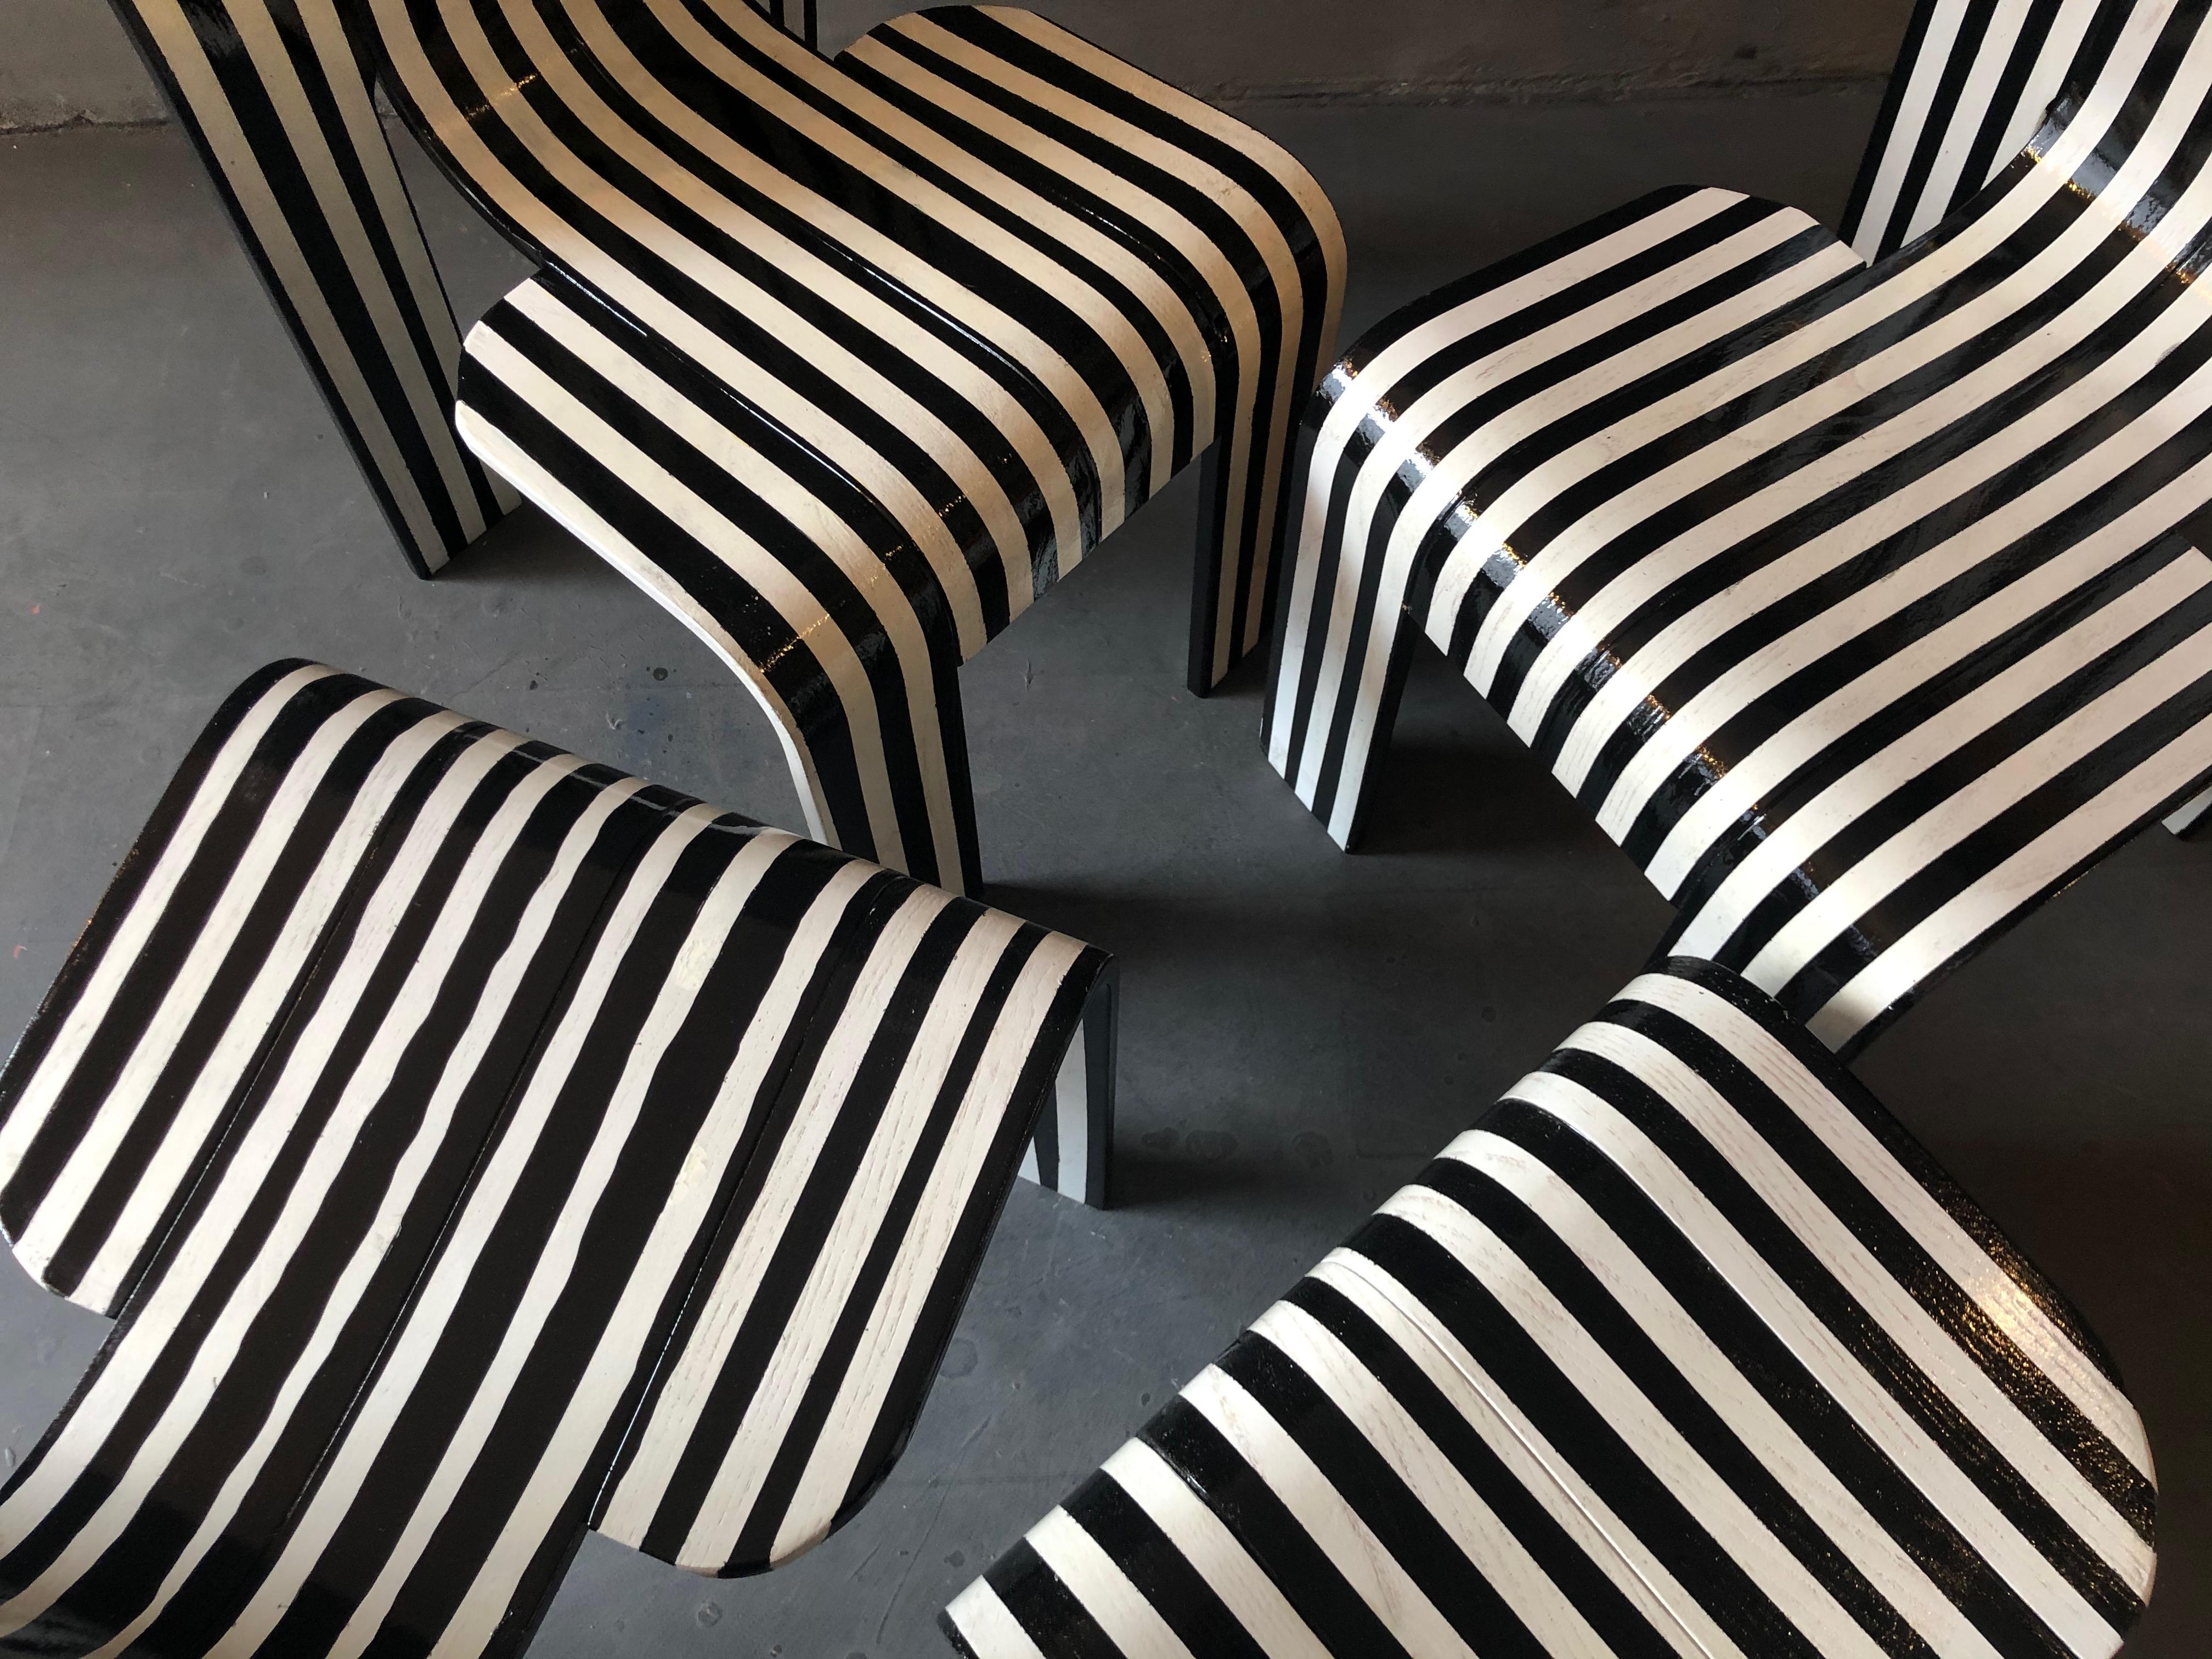 Strip Chair, Gijs Bakker for Castelijn, contemporized in B & W by Atelier Staab For Sale 2